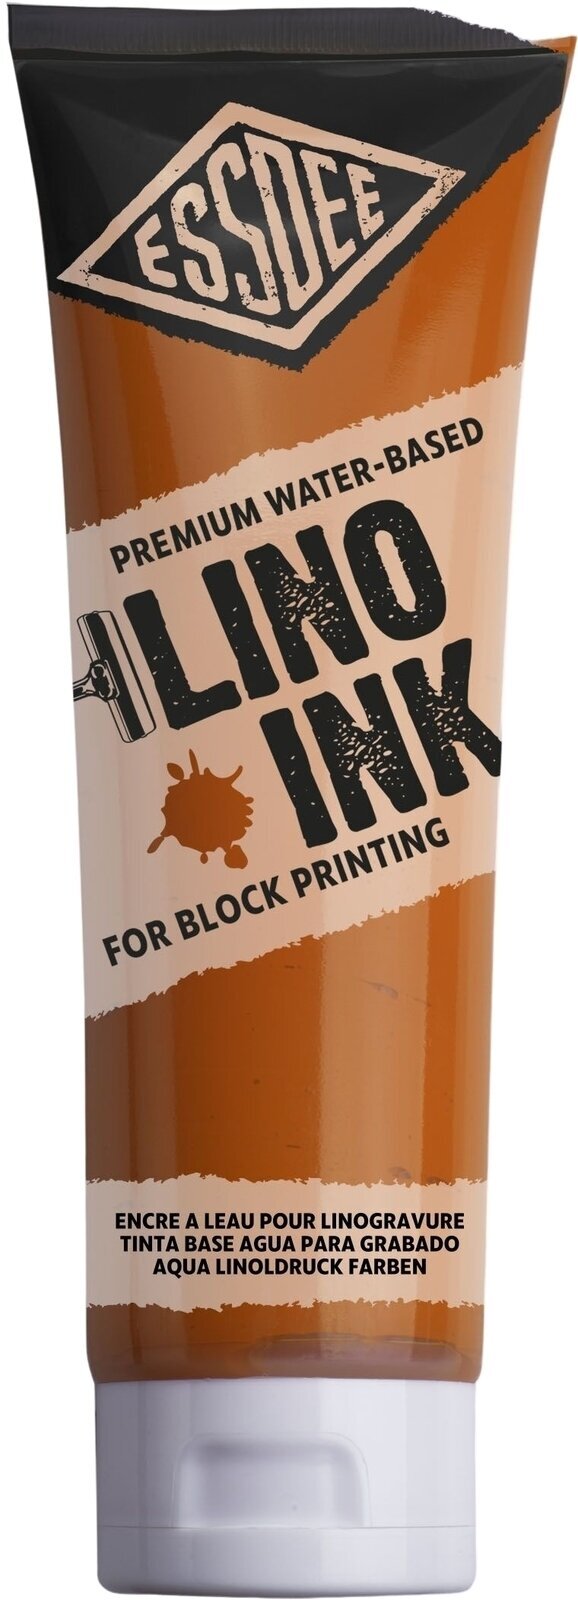 Farbe für Linolschnitt Essdee Block Printing Ink Farbe für Linolschnitt Orange 300 ml